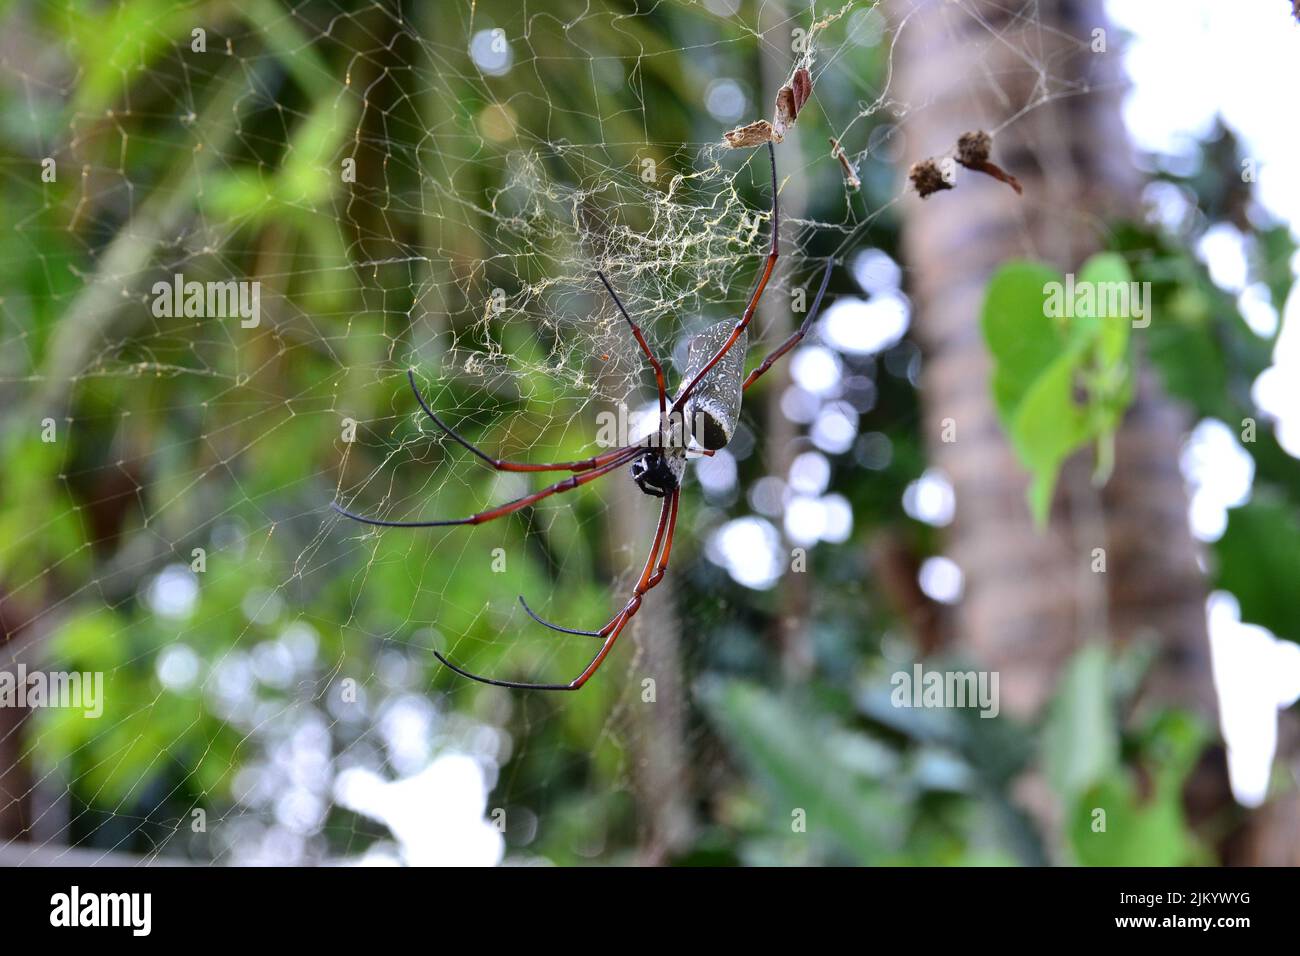 A spider in Thailand, Koh Mak Stock Photo